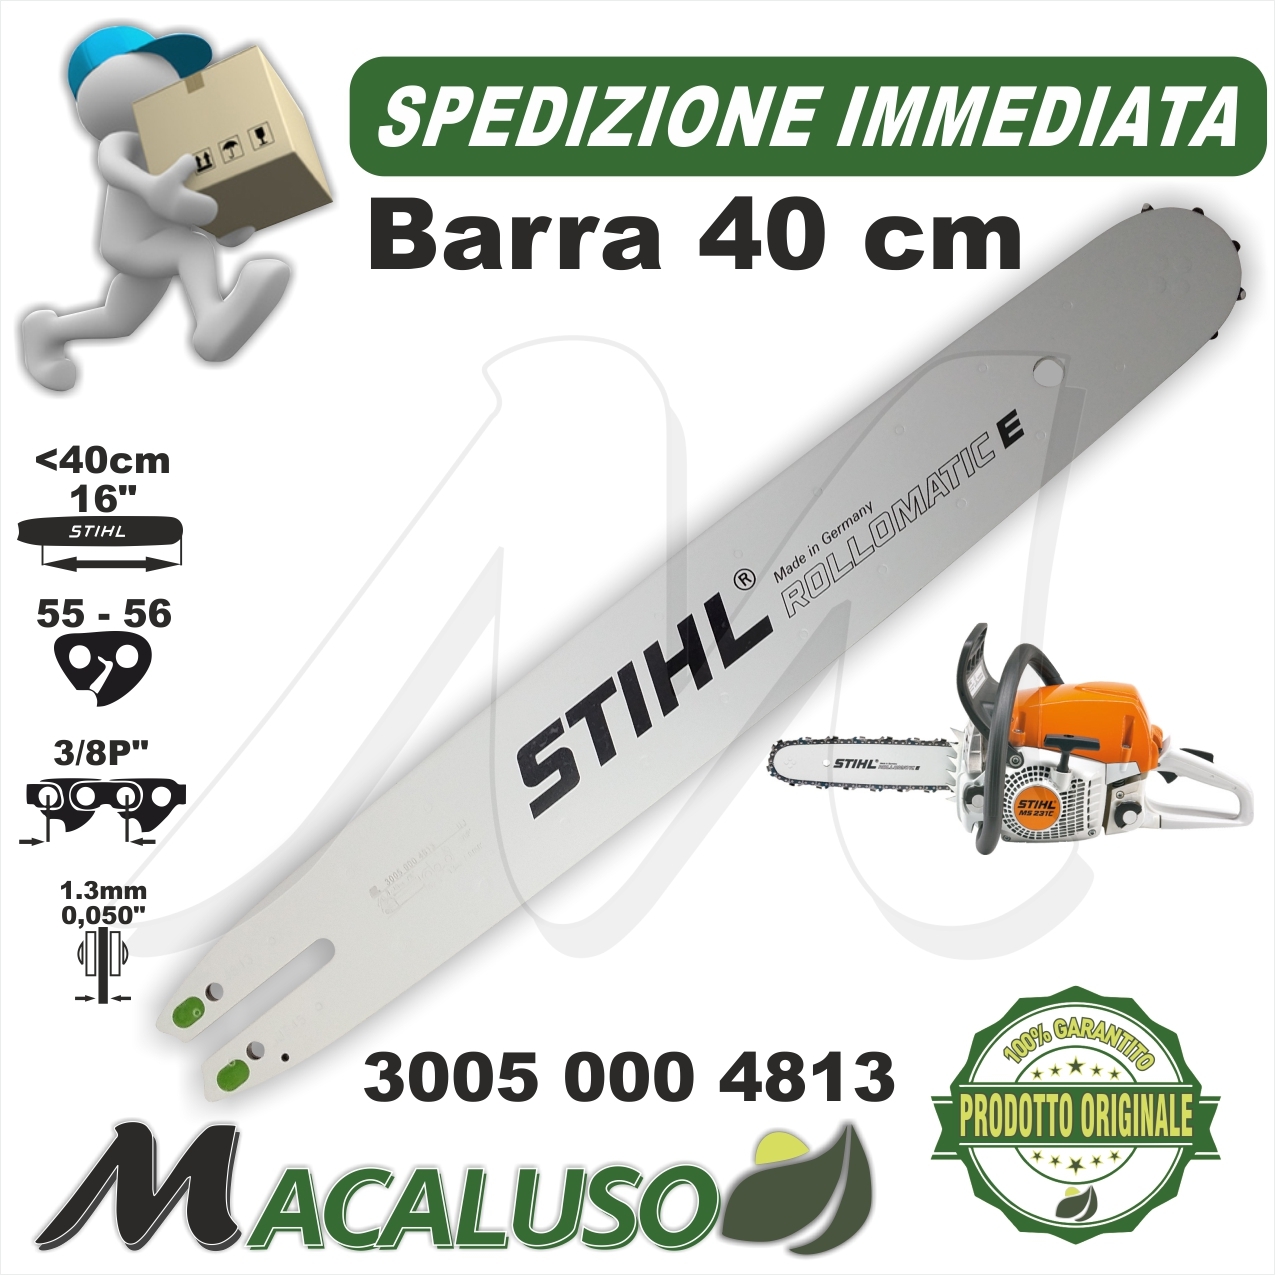 Barra Stihl 16 Cm .40 x motosega MS180 MS181 passo 3/8P mm. 1,3 maglie 55  spranga 30050004813 - Macaluso Macchine Agricole